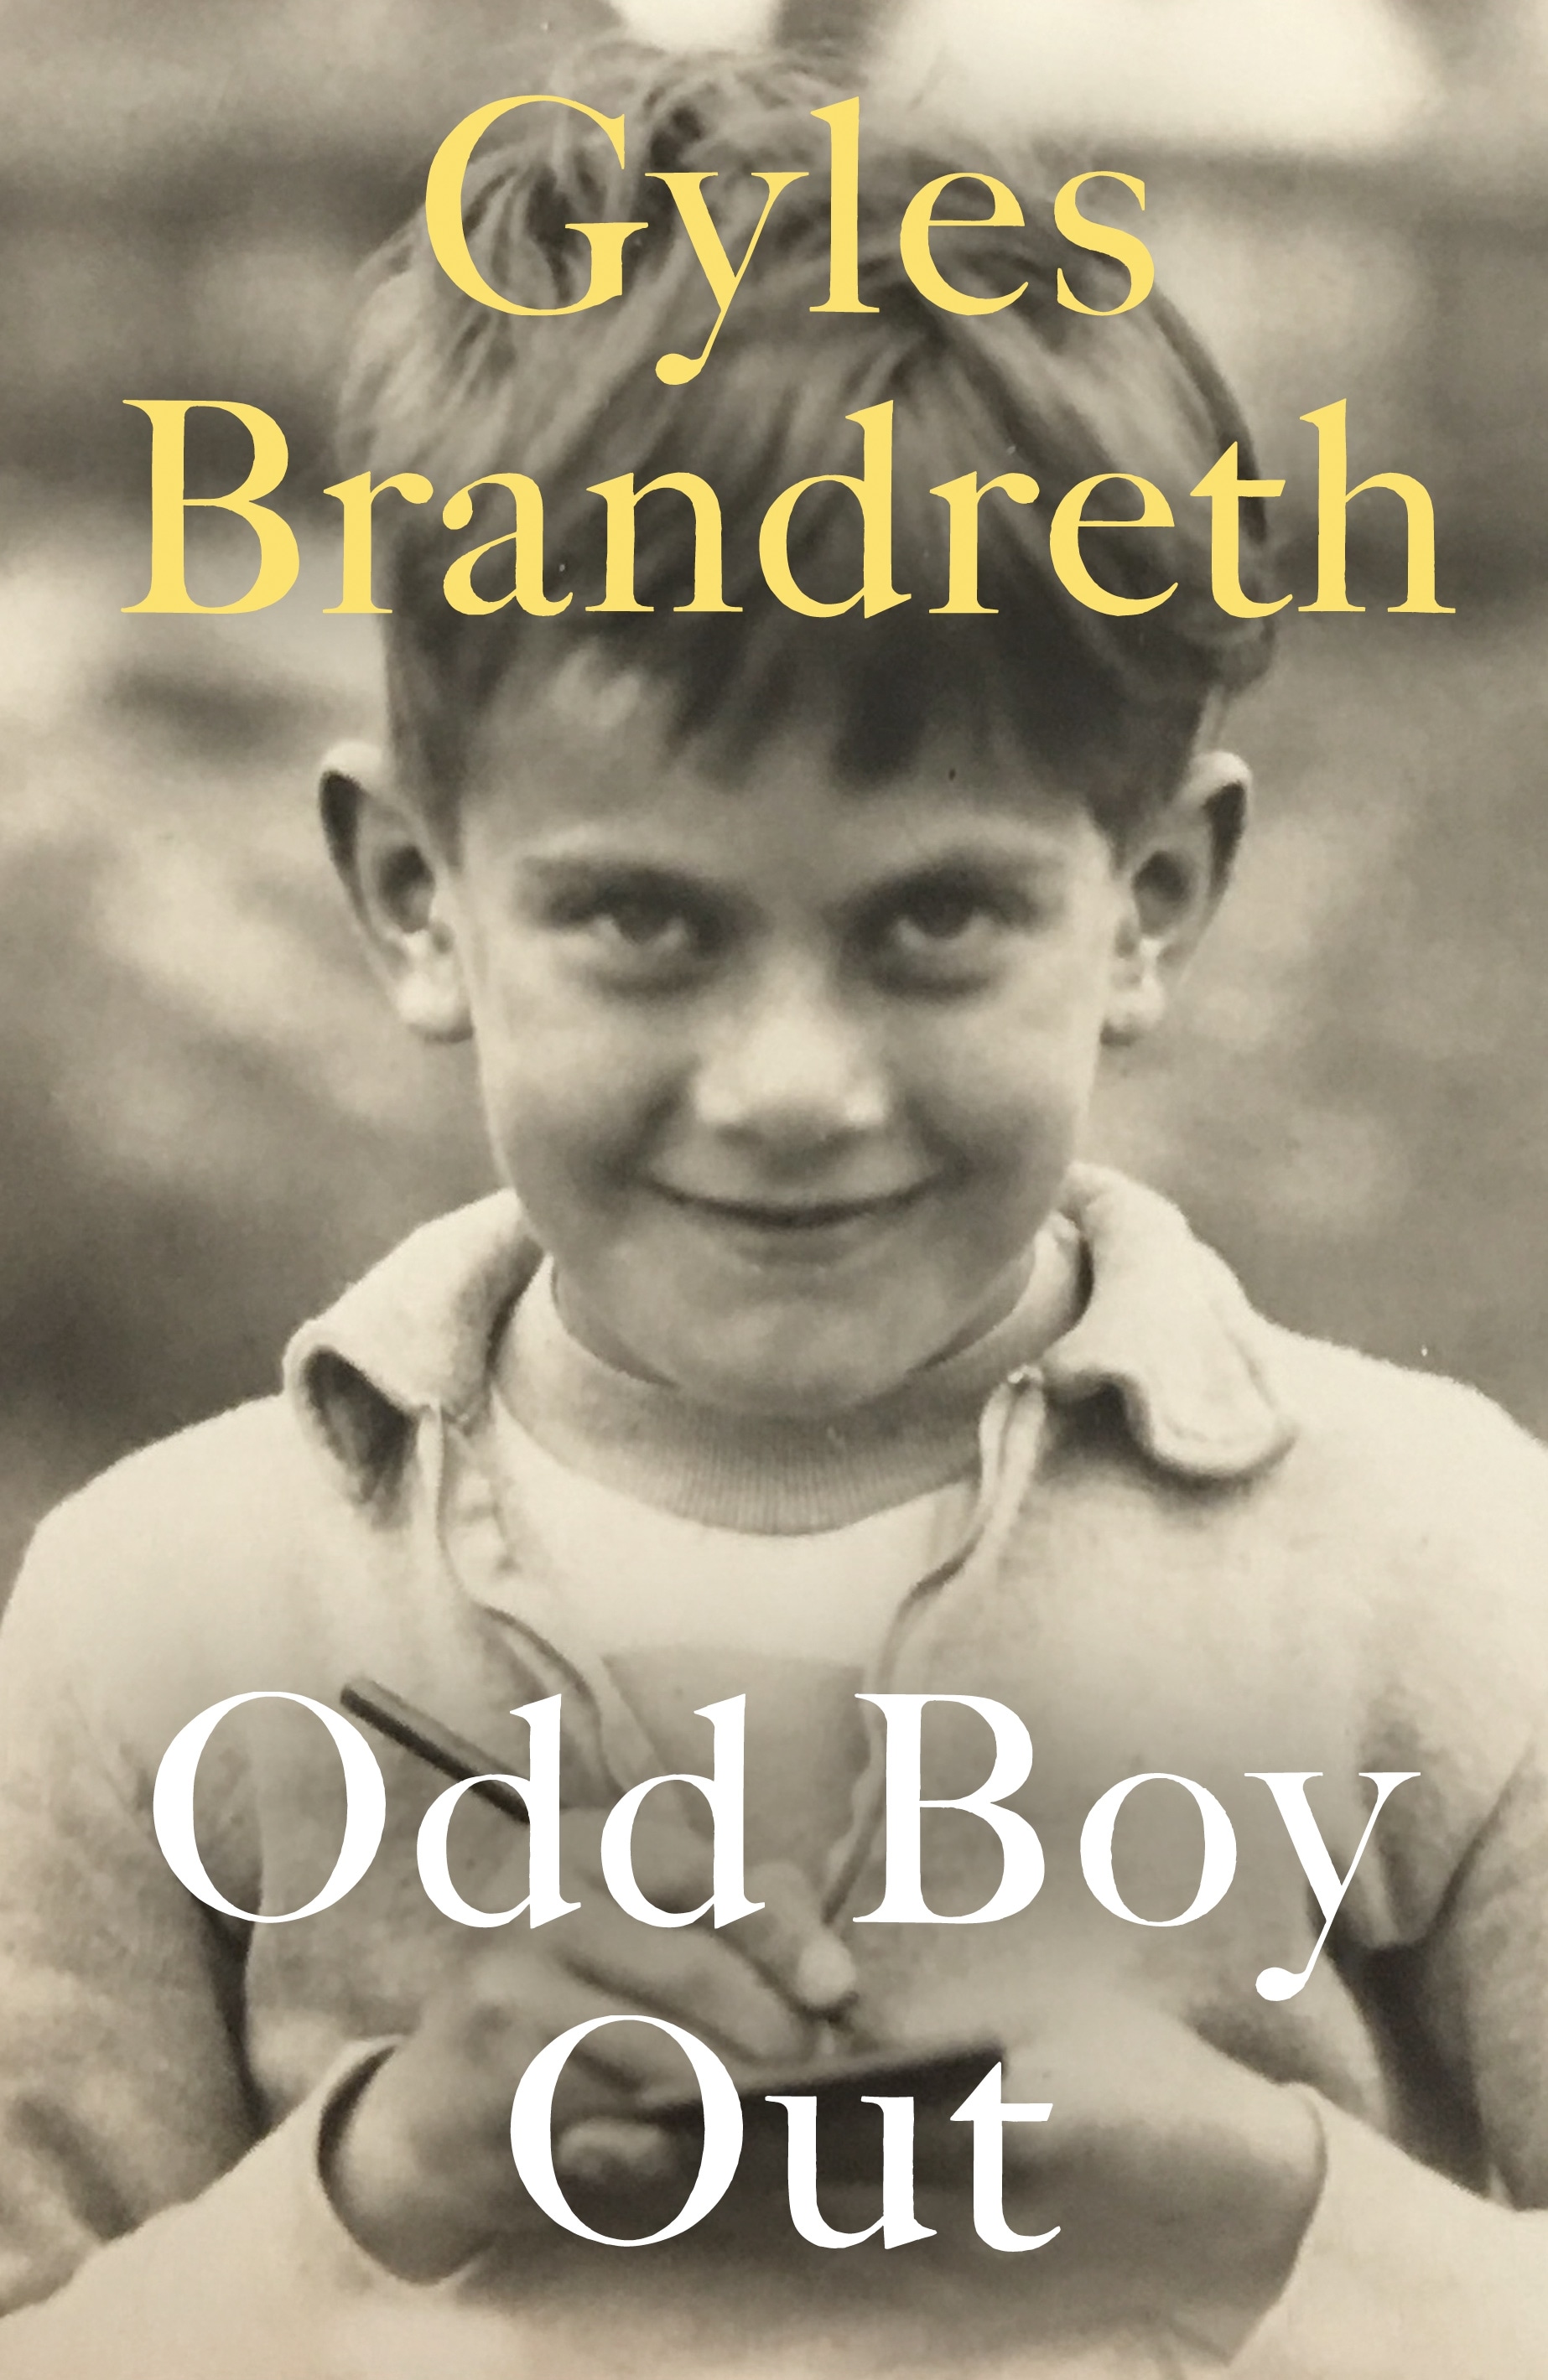 Book “Odd Boy Out” by Gyles Brandreth — September 16, 2021